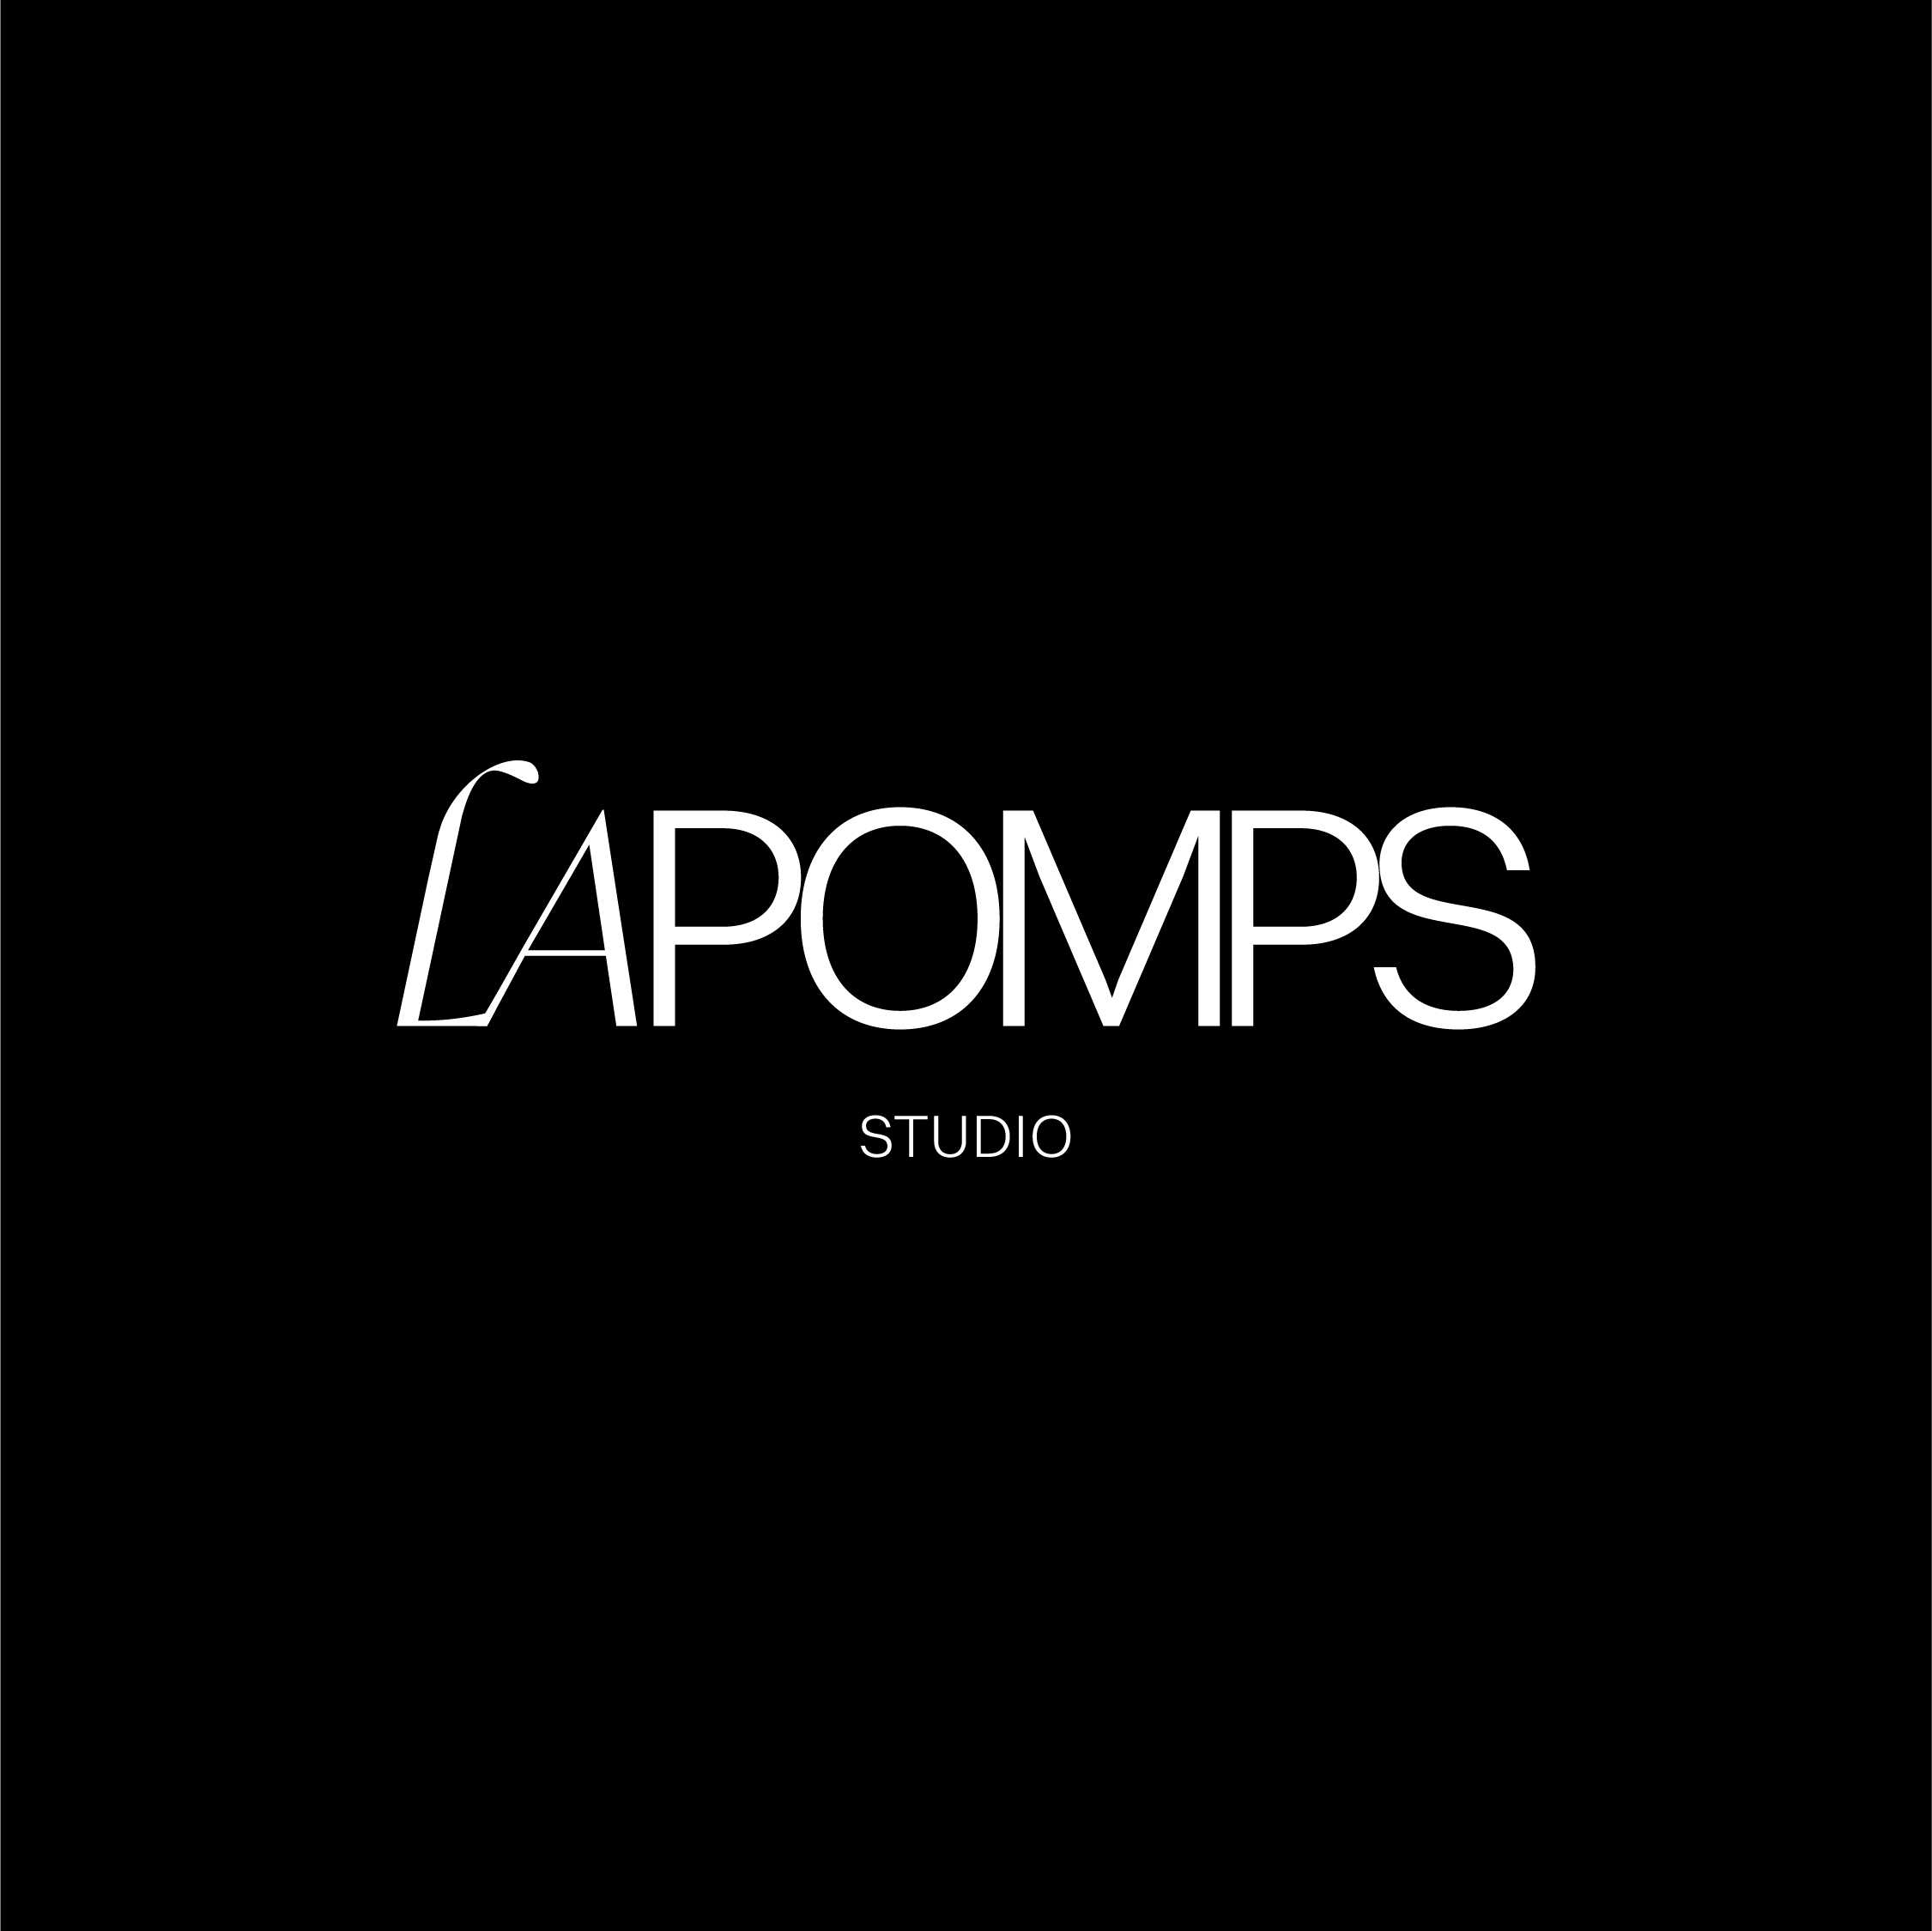 PT Lapomps Creative Studio